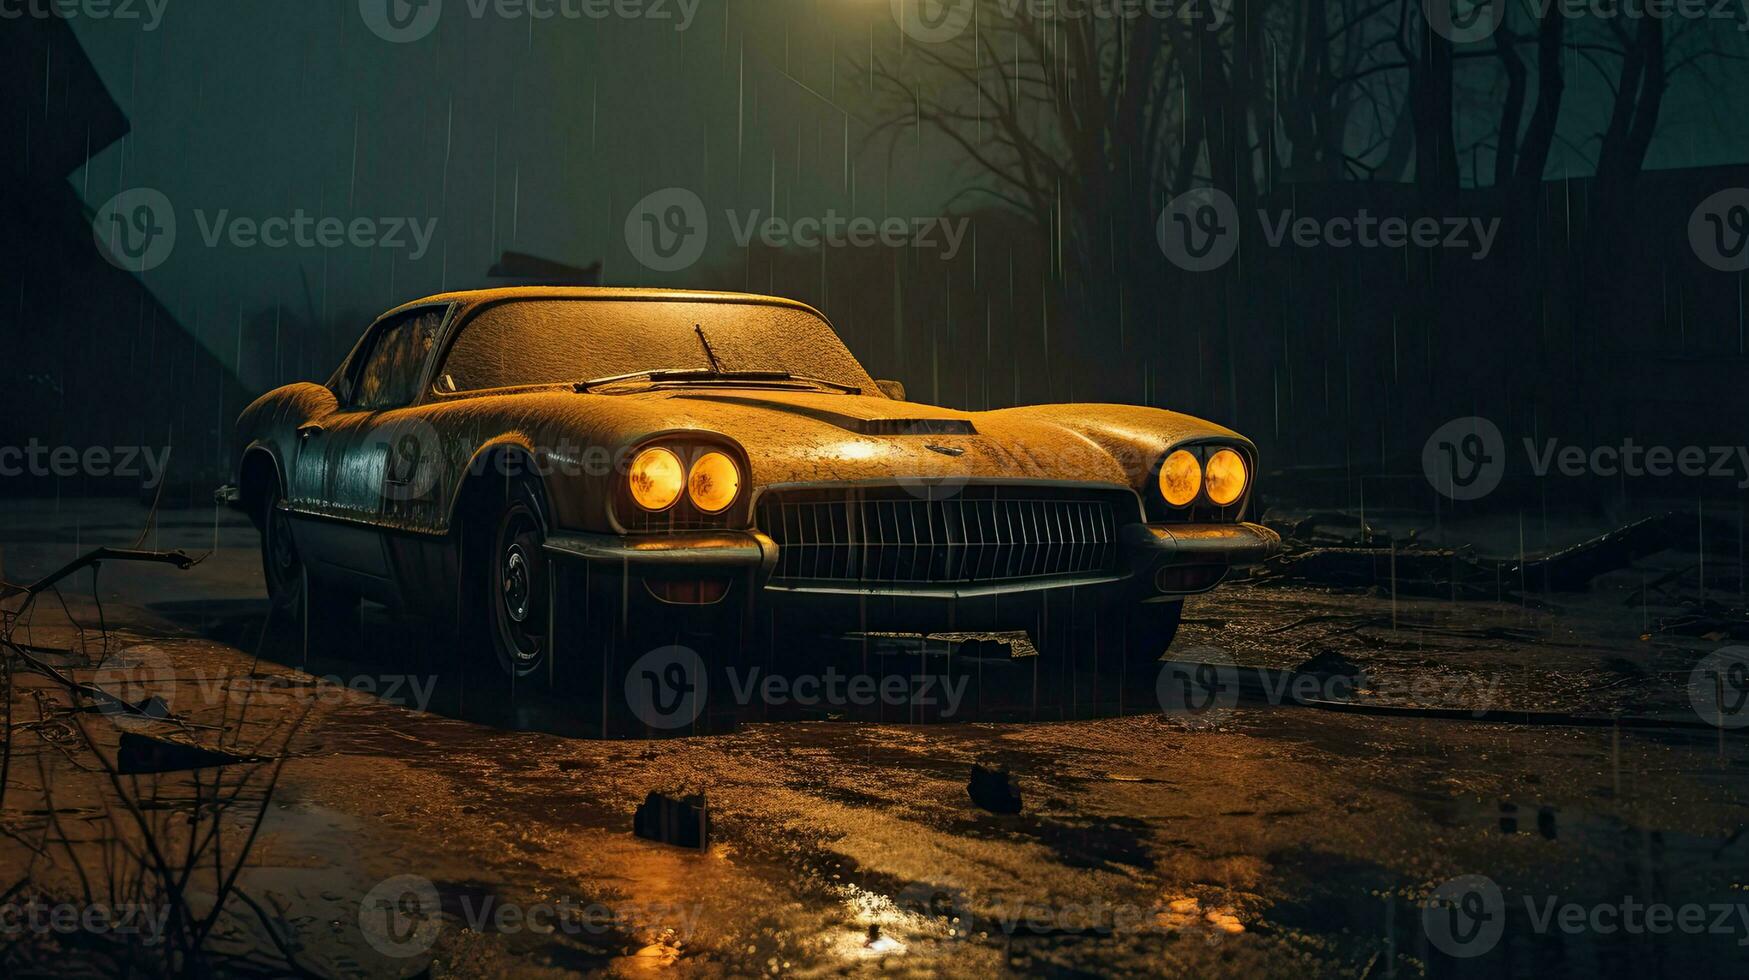 retro super car destroyed post apocalypse landscape game wallpaper photo art illustration rust